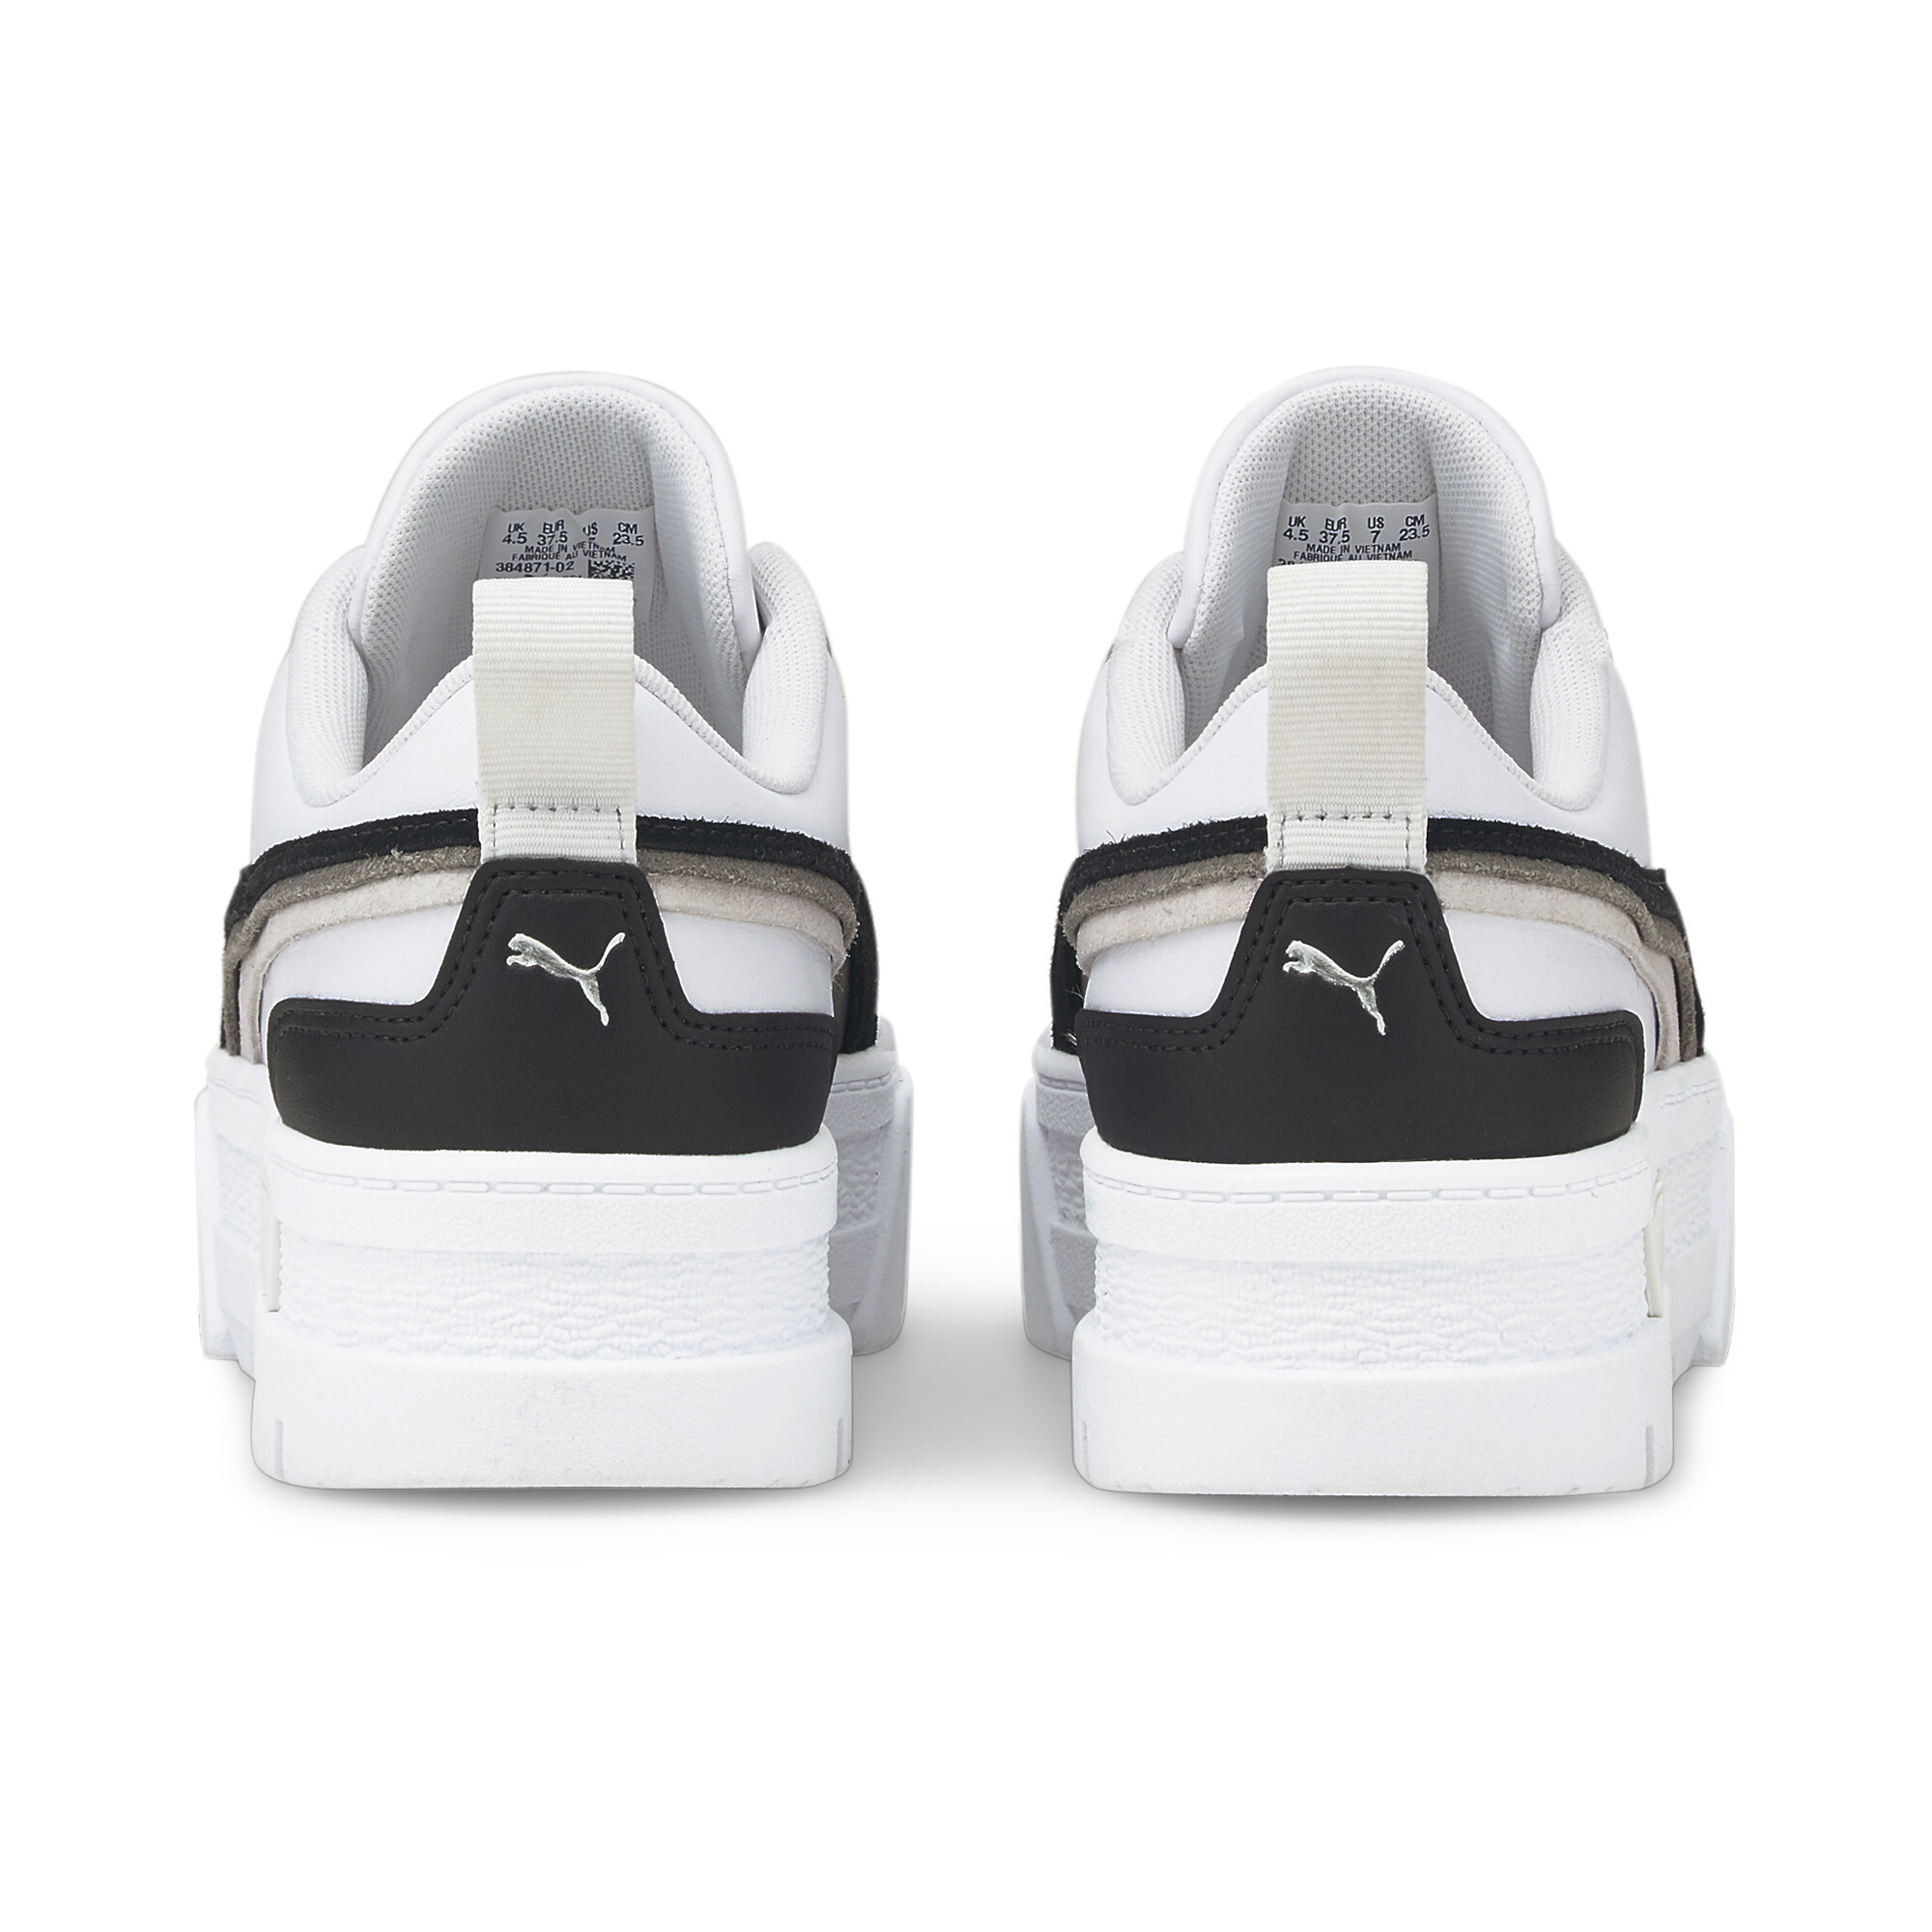 Women's PUMA Mayze Triplex Trainers Shoes In White, Size EU 35.5